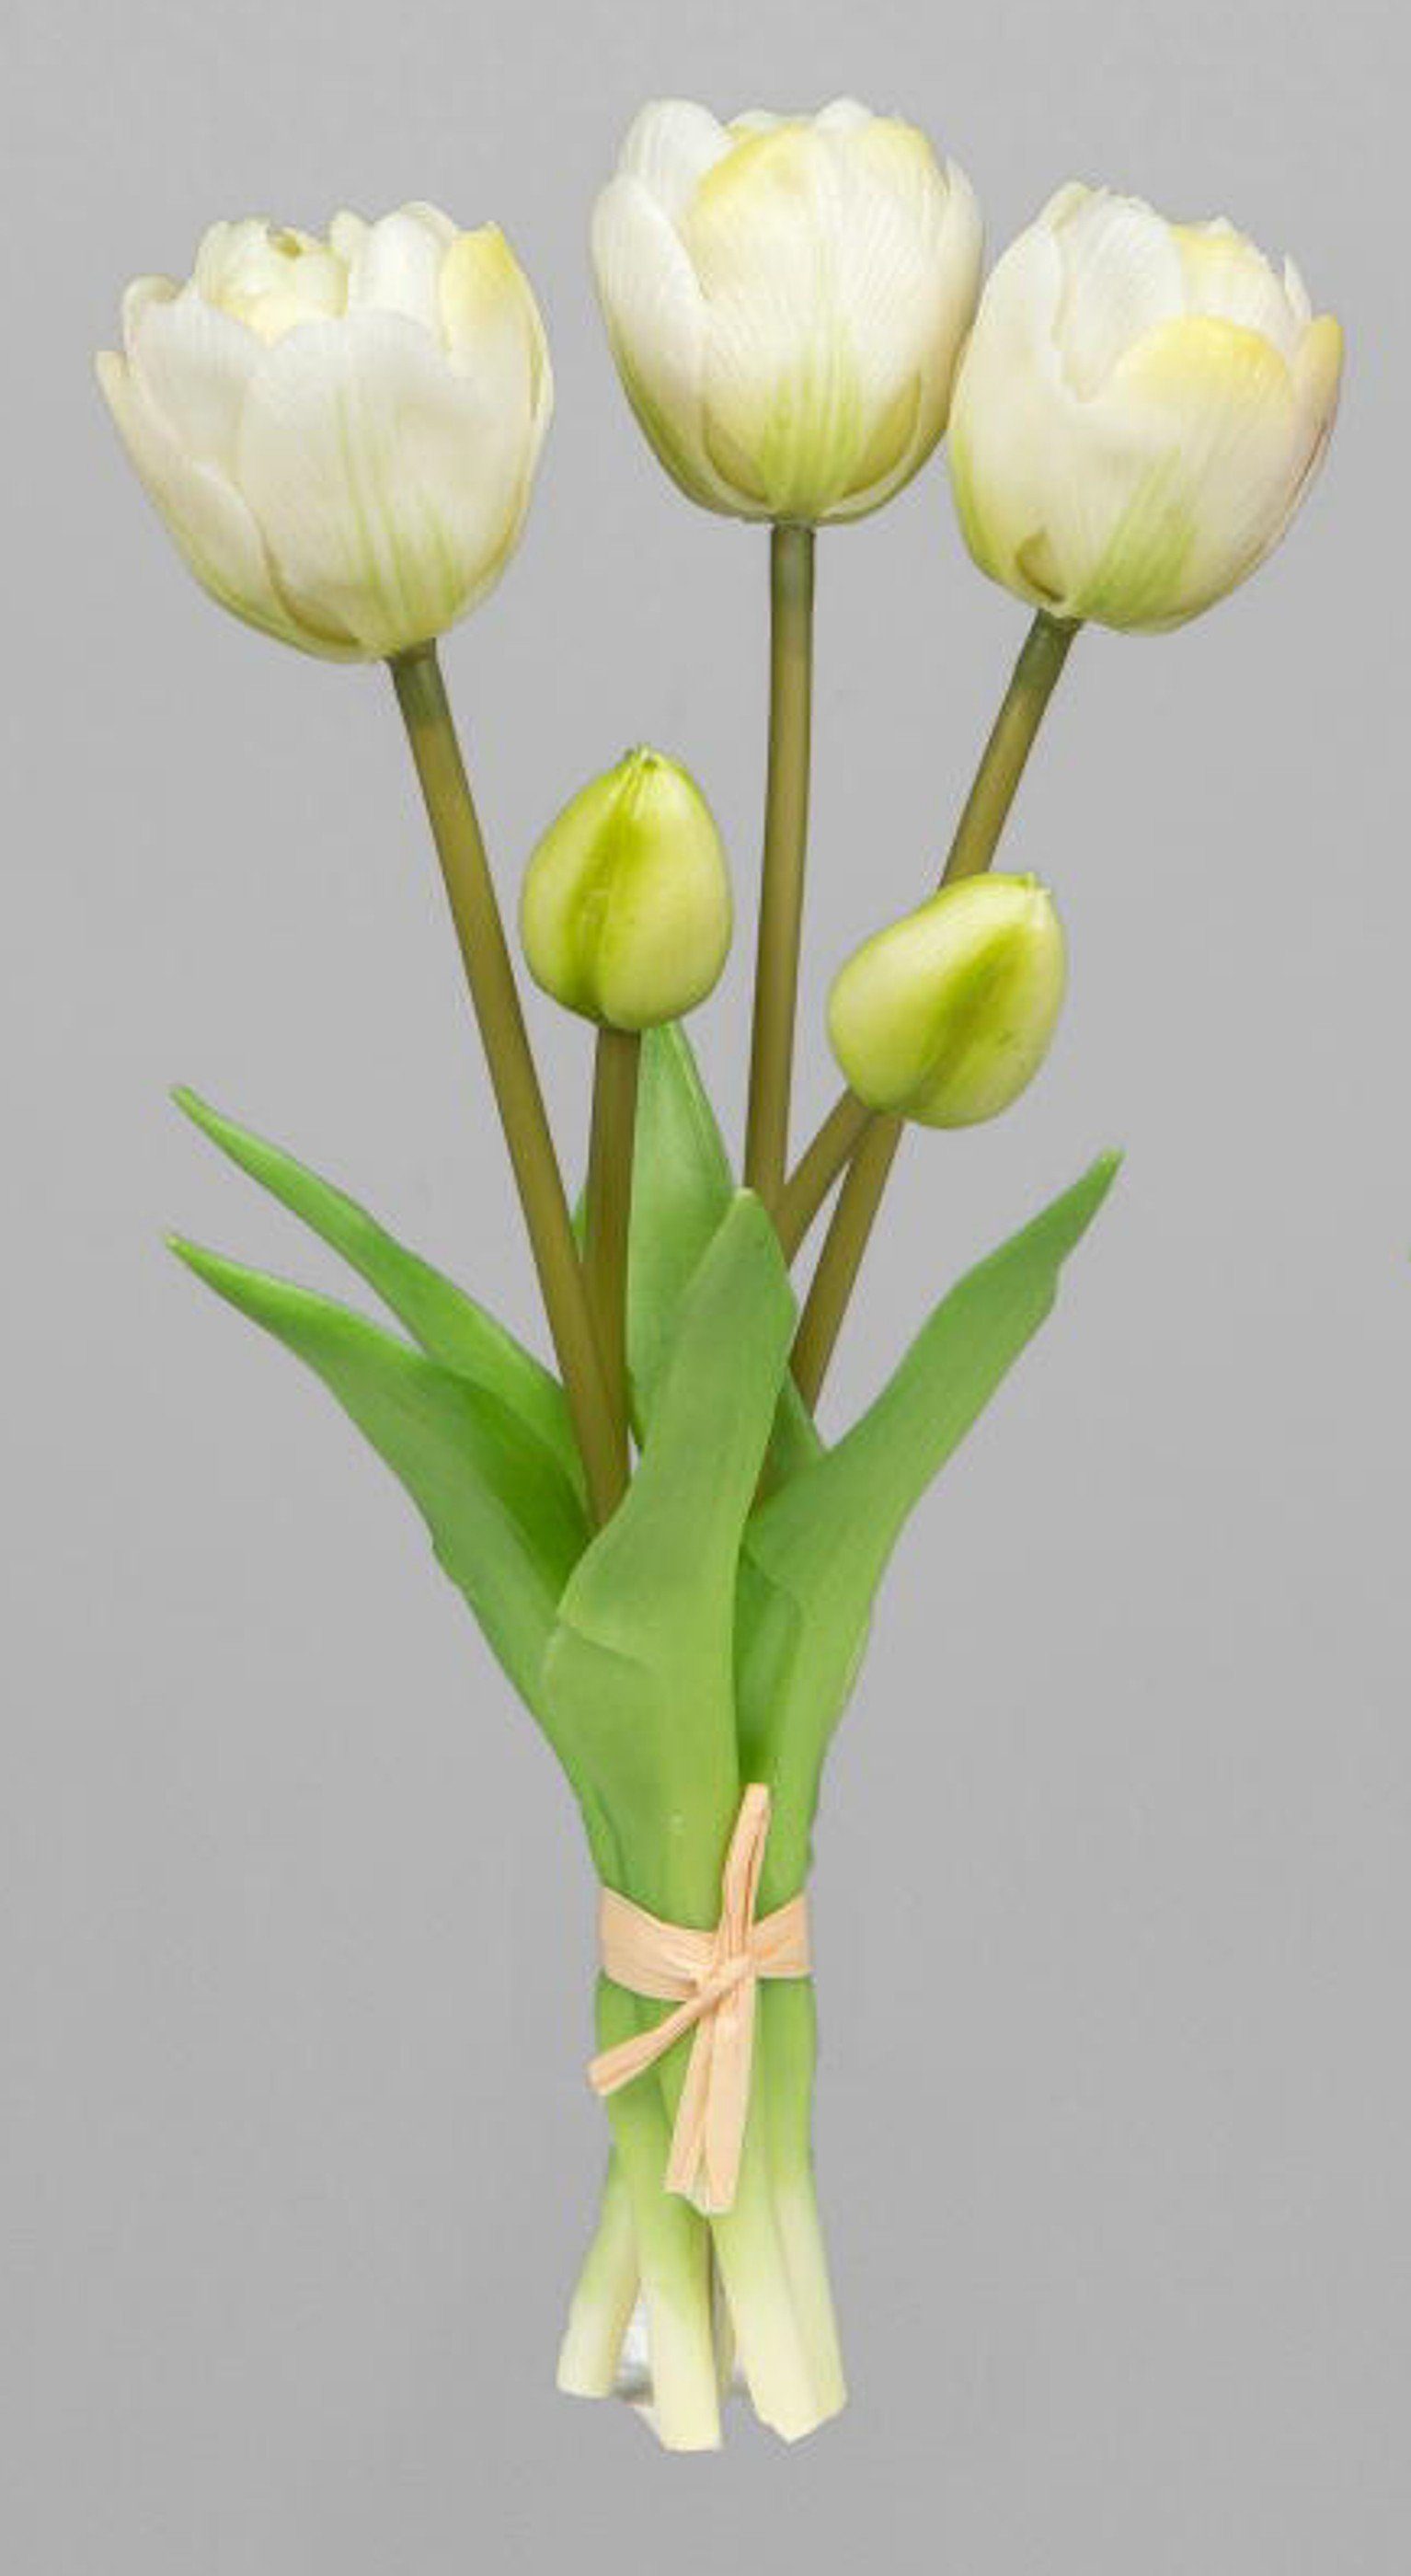 Höhe Tulpenbündel, weiß, 5 cm Kunstblume 60 Stück, formano formano, Kunstblume Kunstpflanze,